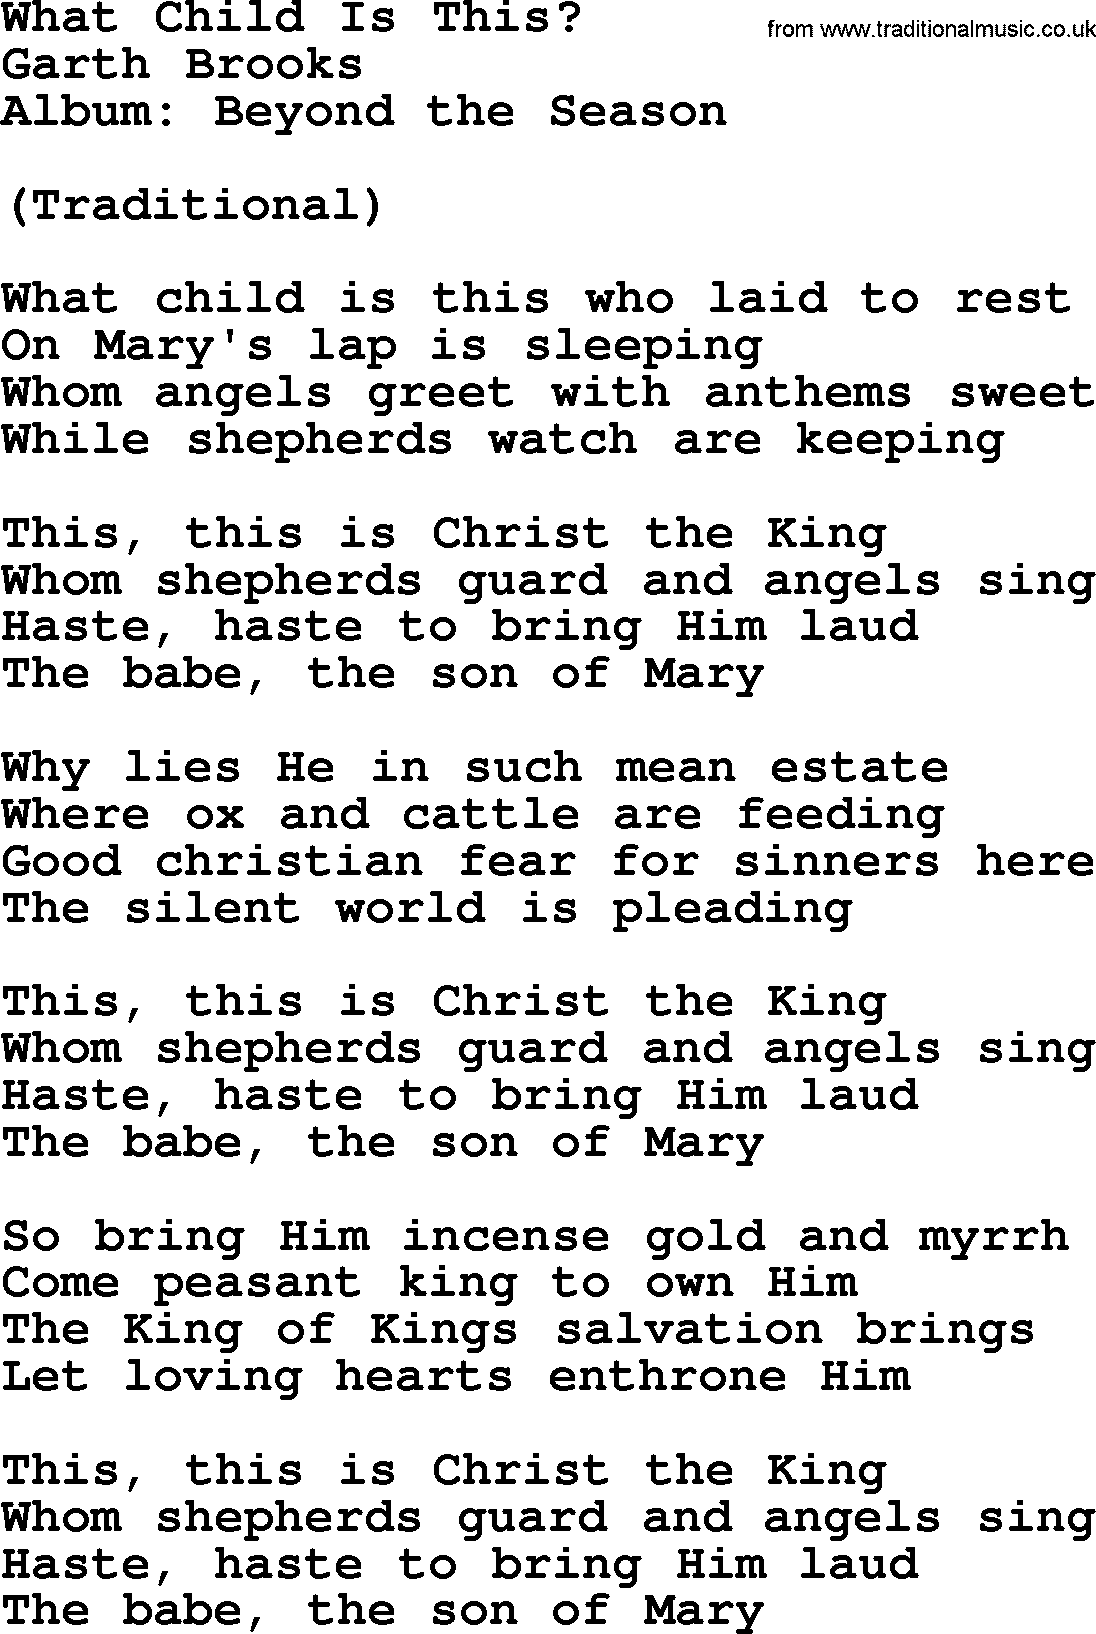 Garth Brooks song: What Child Is This, lyrics